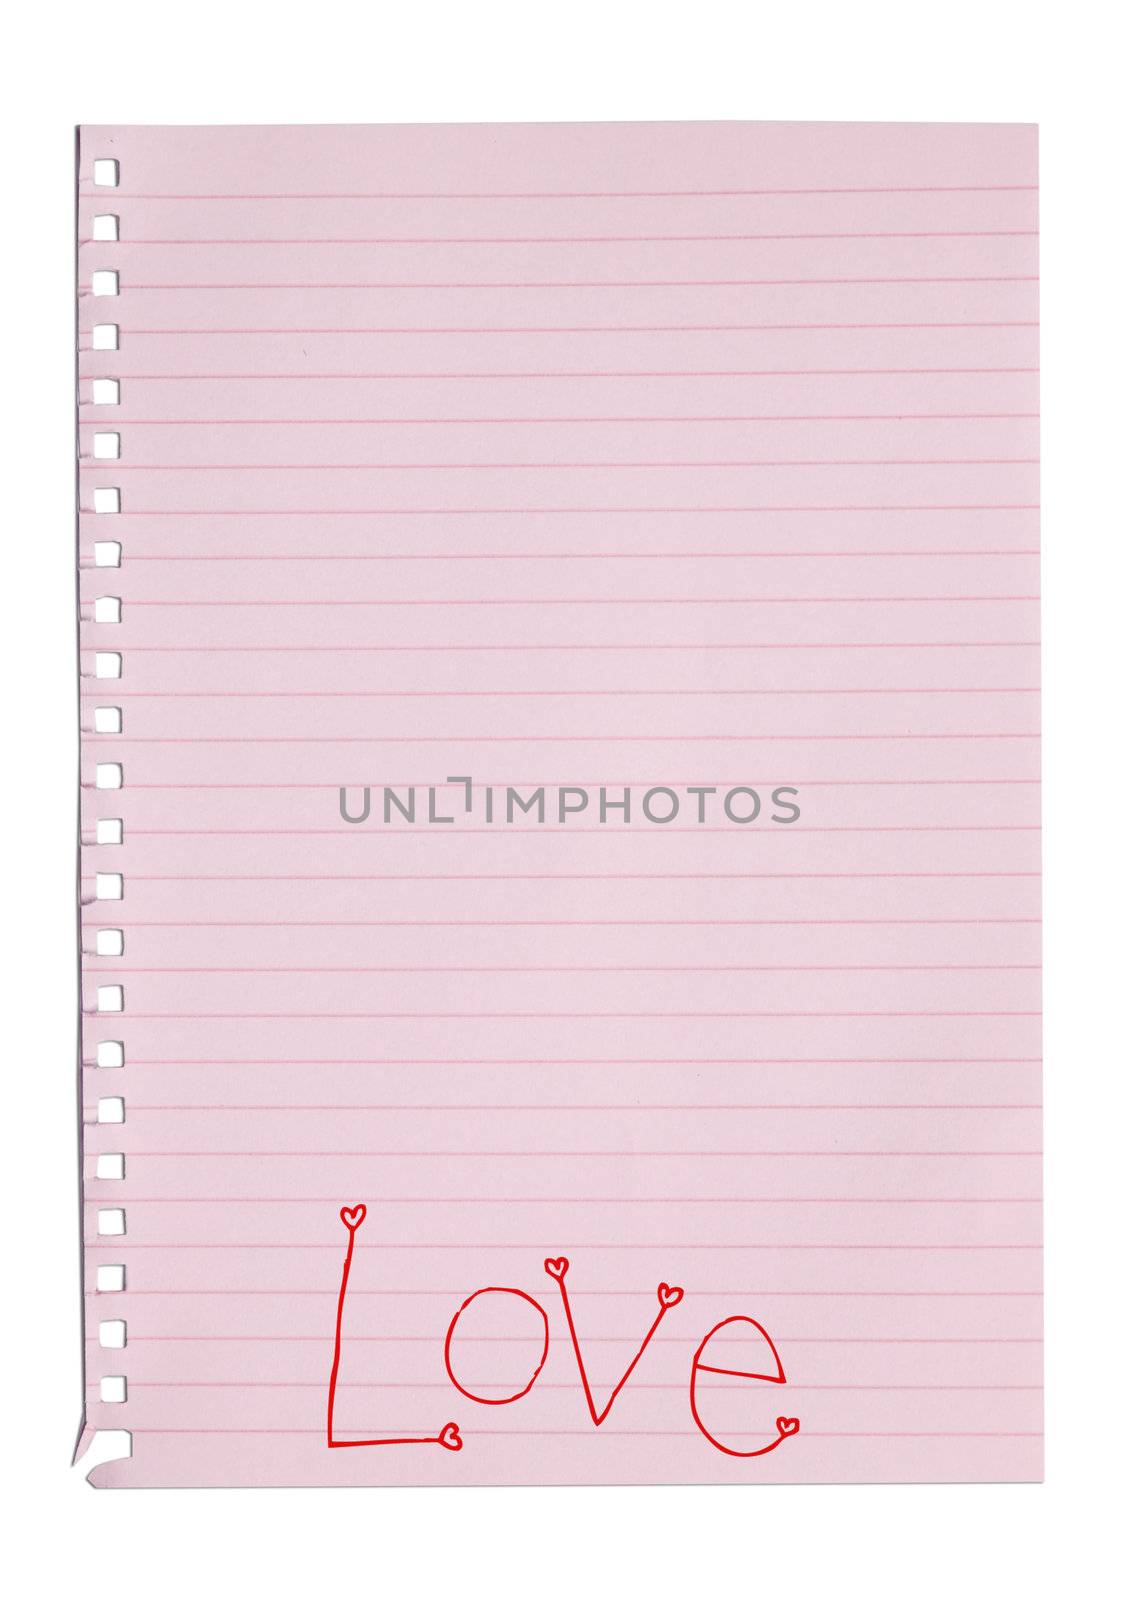 Handwriting love word on pink note paper by nuchylee